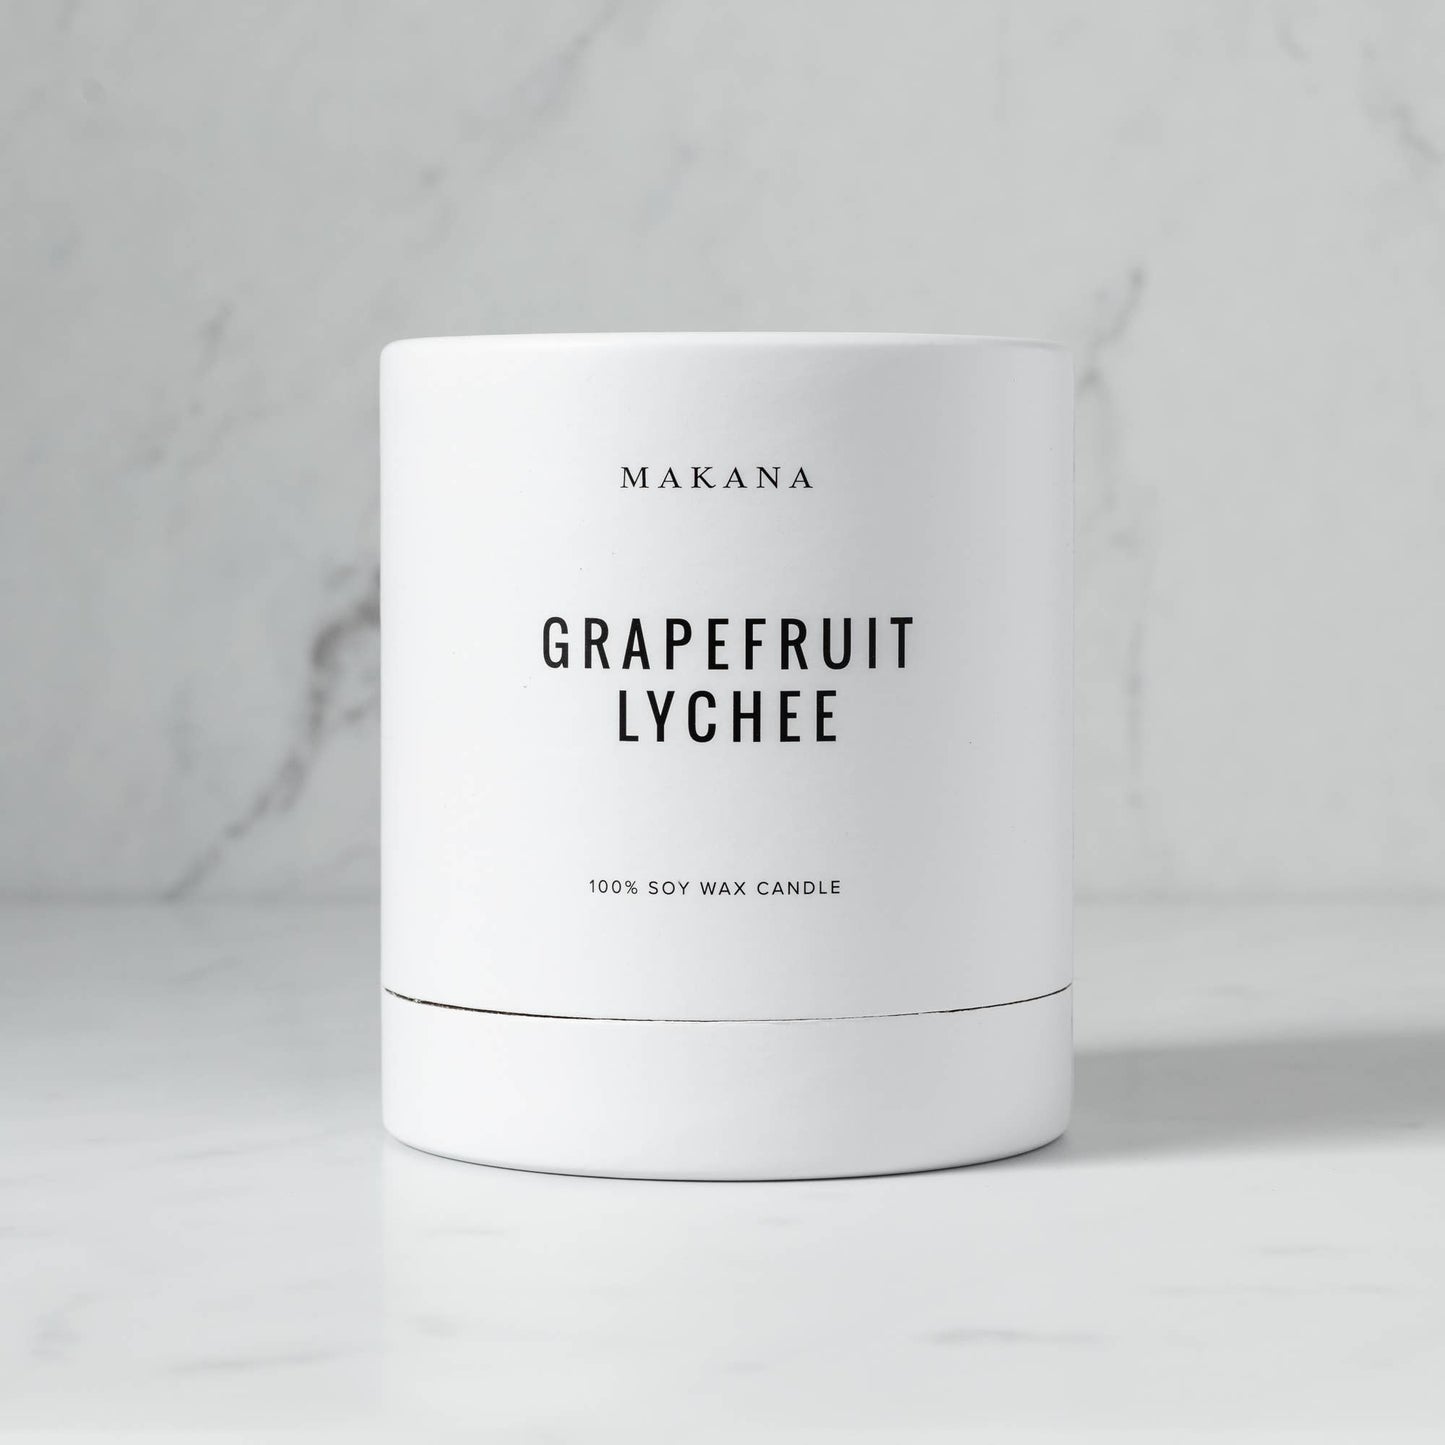 Makana - Grapefruit Lychee - Classic Candle 10 oz